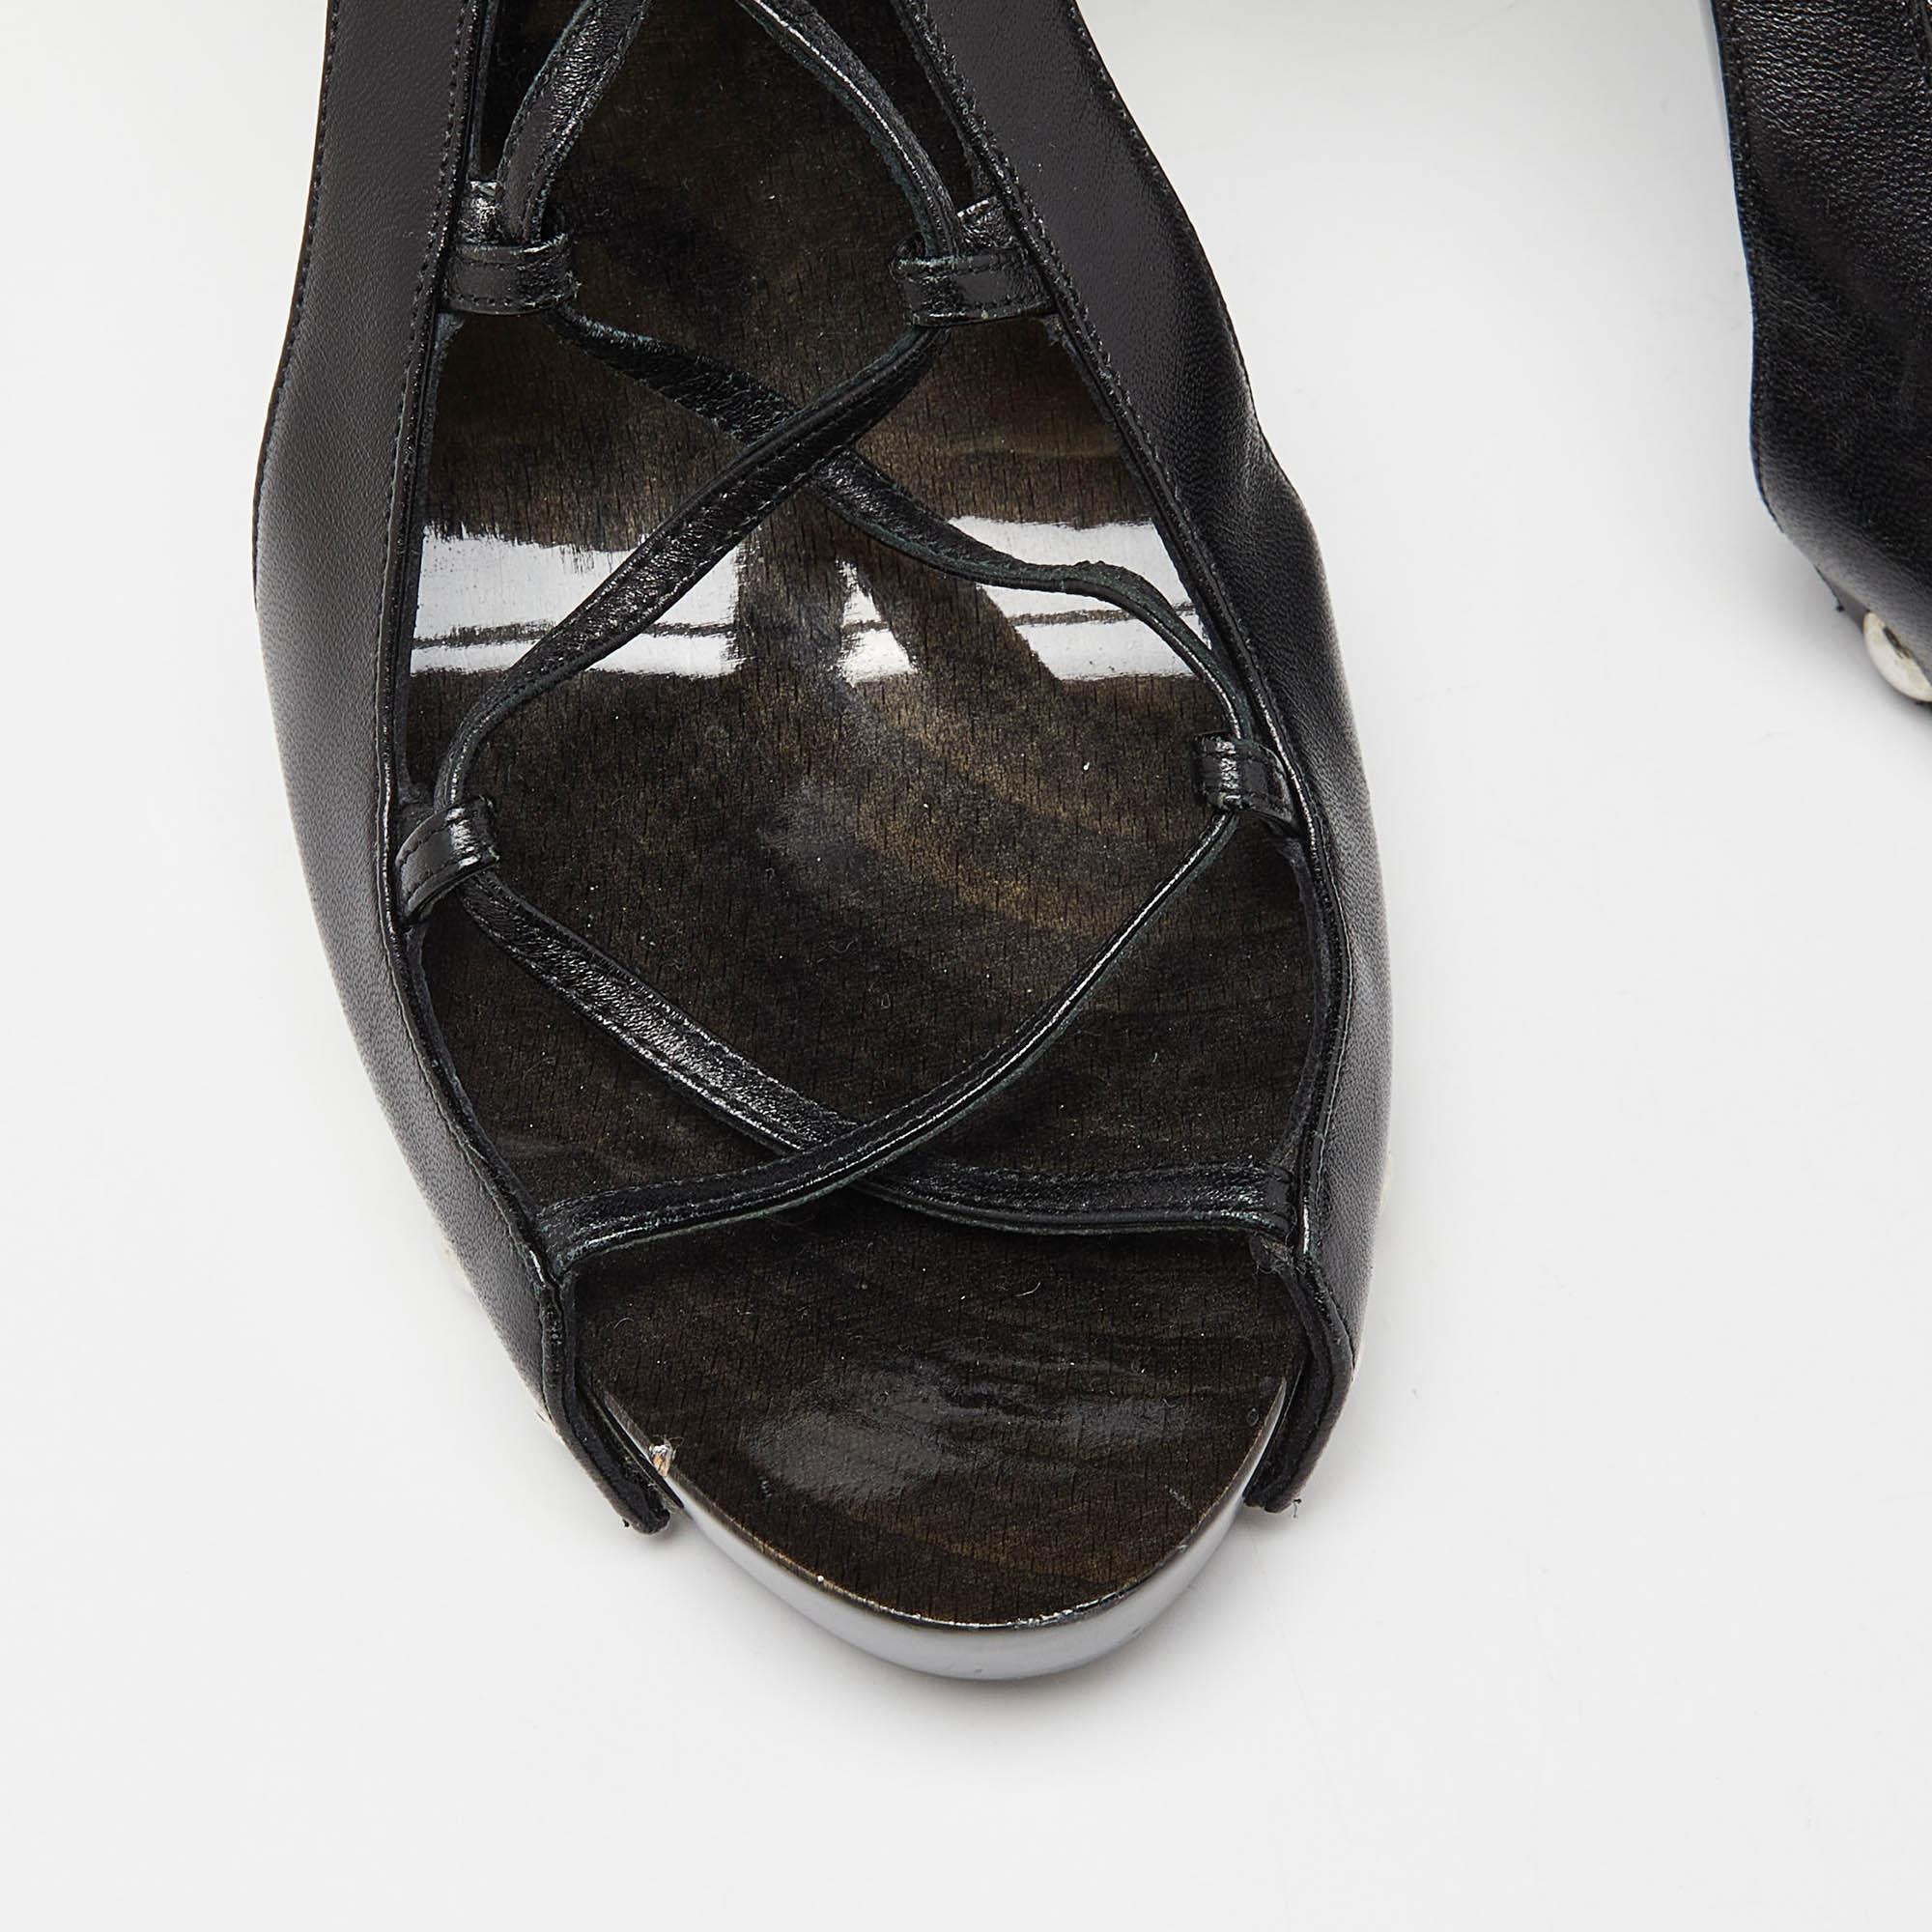 Manolo Blahnik Black Leather Ankle Wrap Sandals Size 41